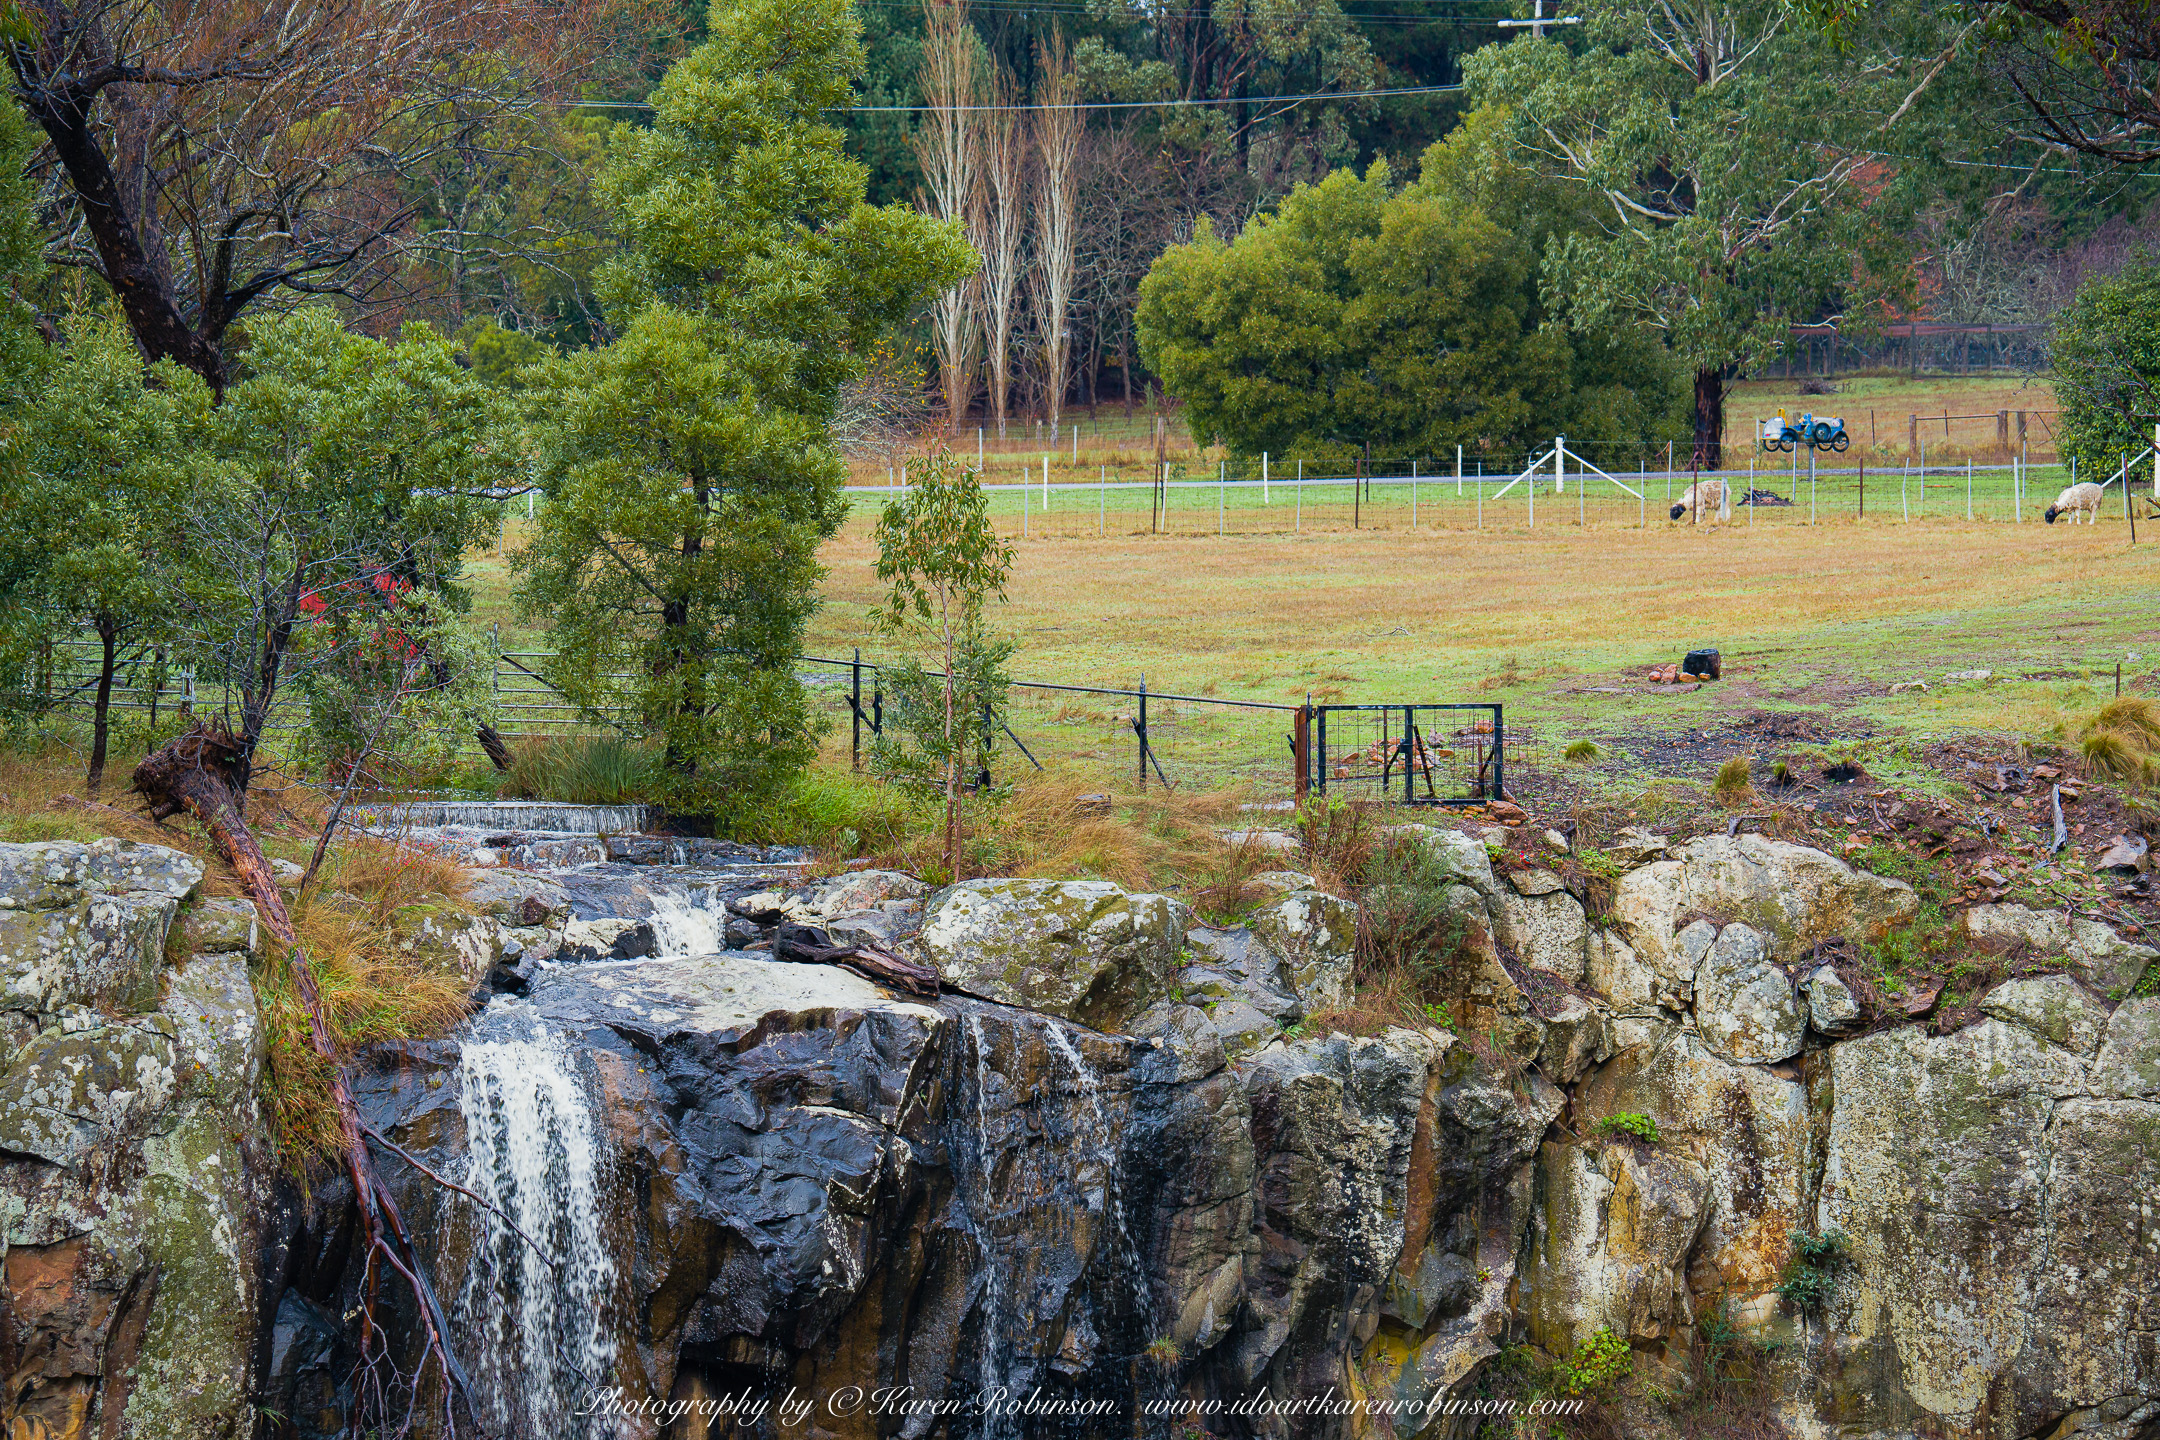 Photography 2021 – Landscape: “Sailors Falls, Victoria –
Australia” Written and Photographed by Karen Robinson